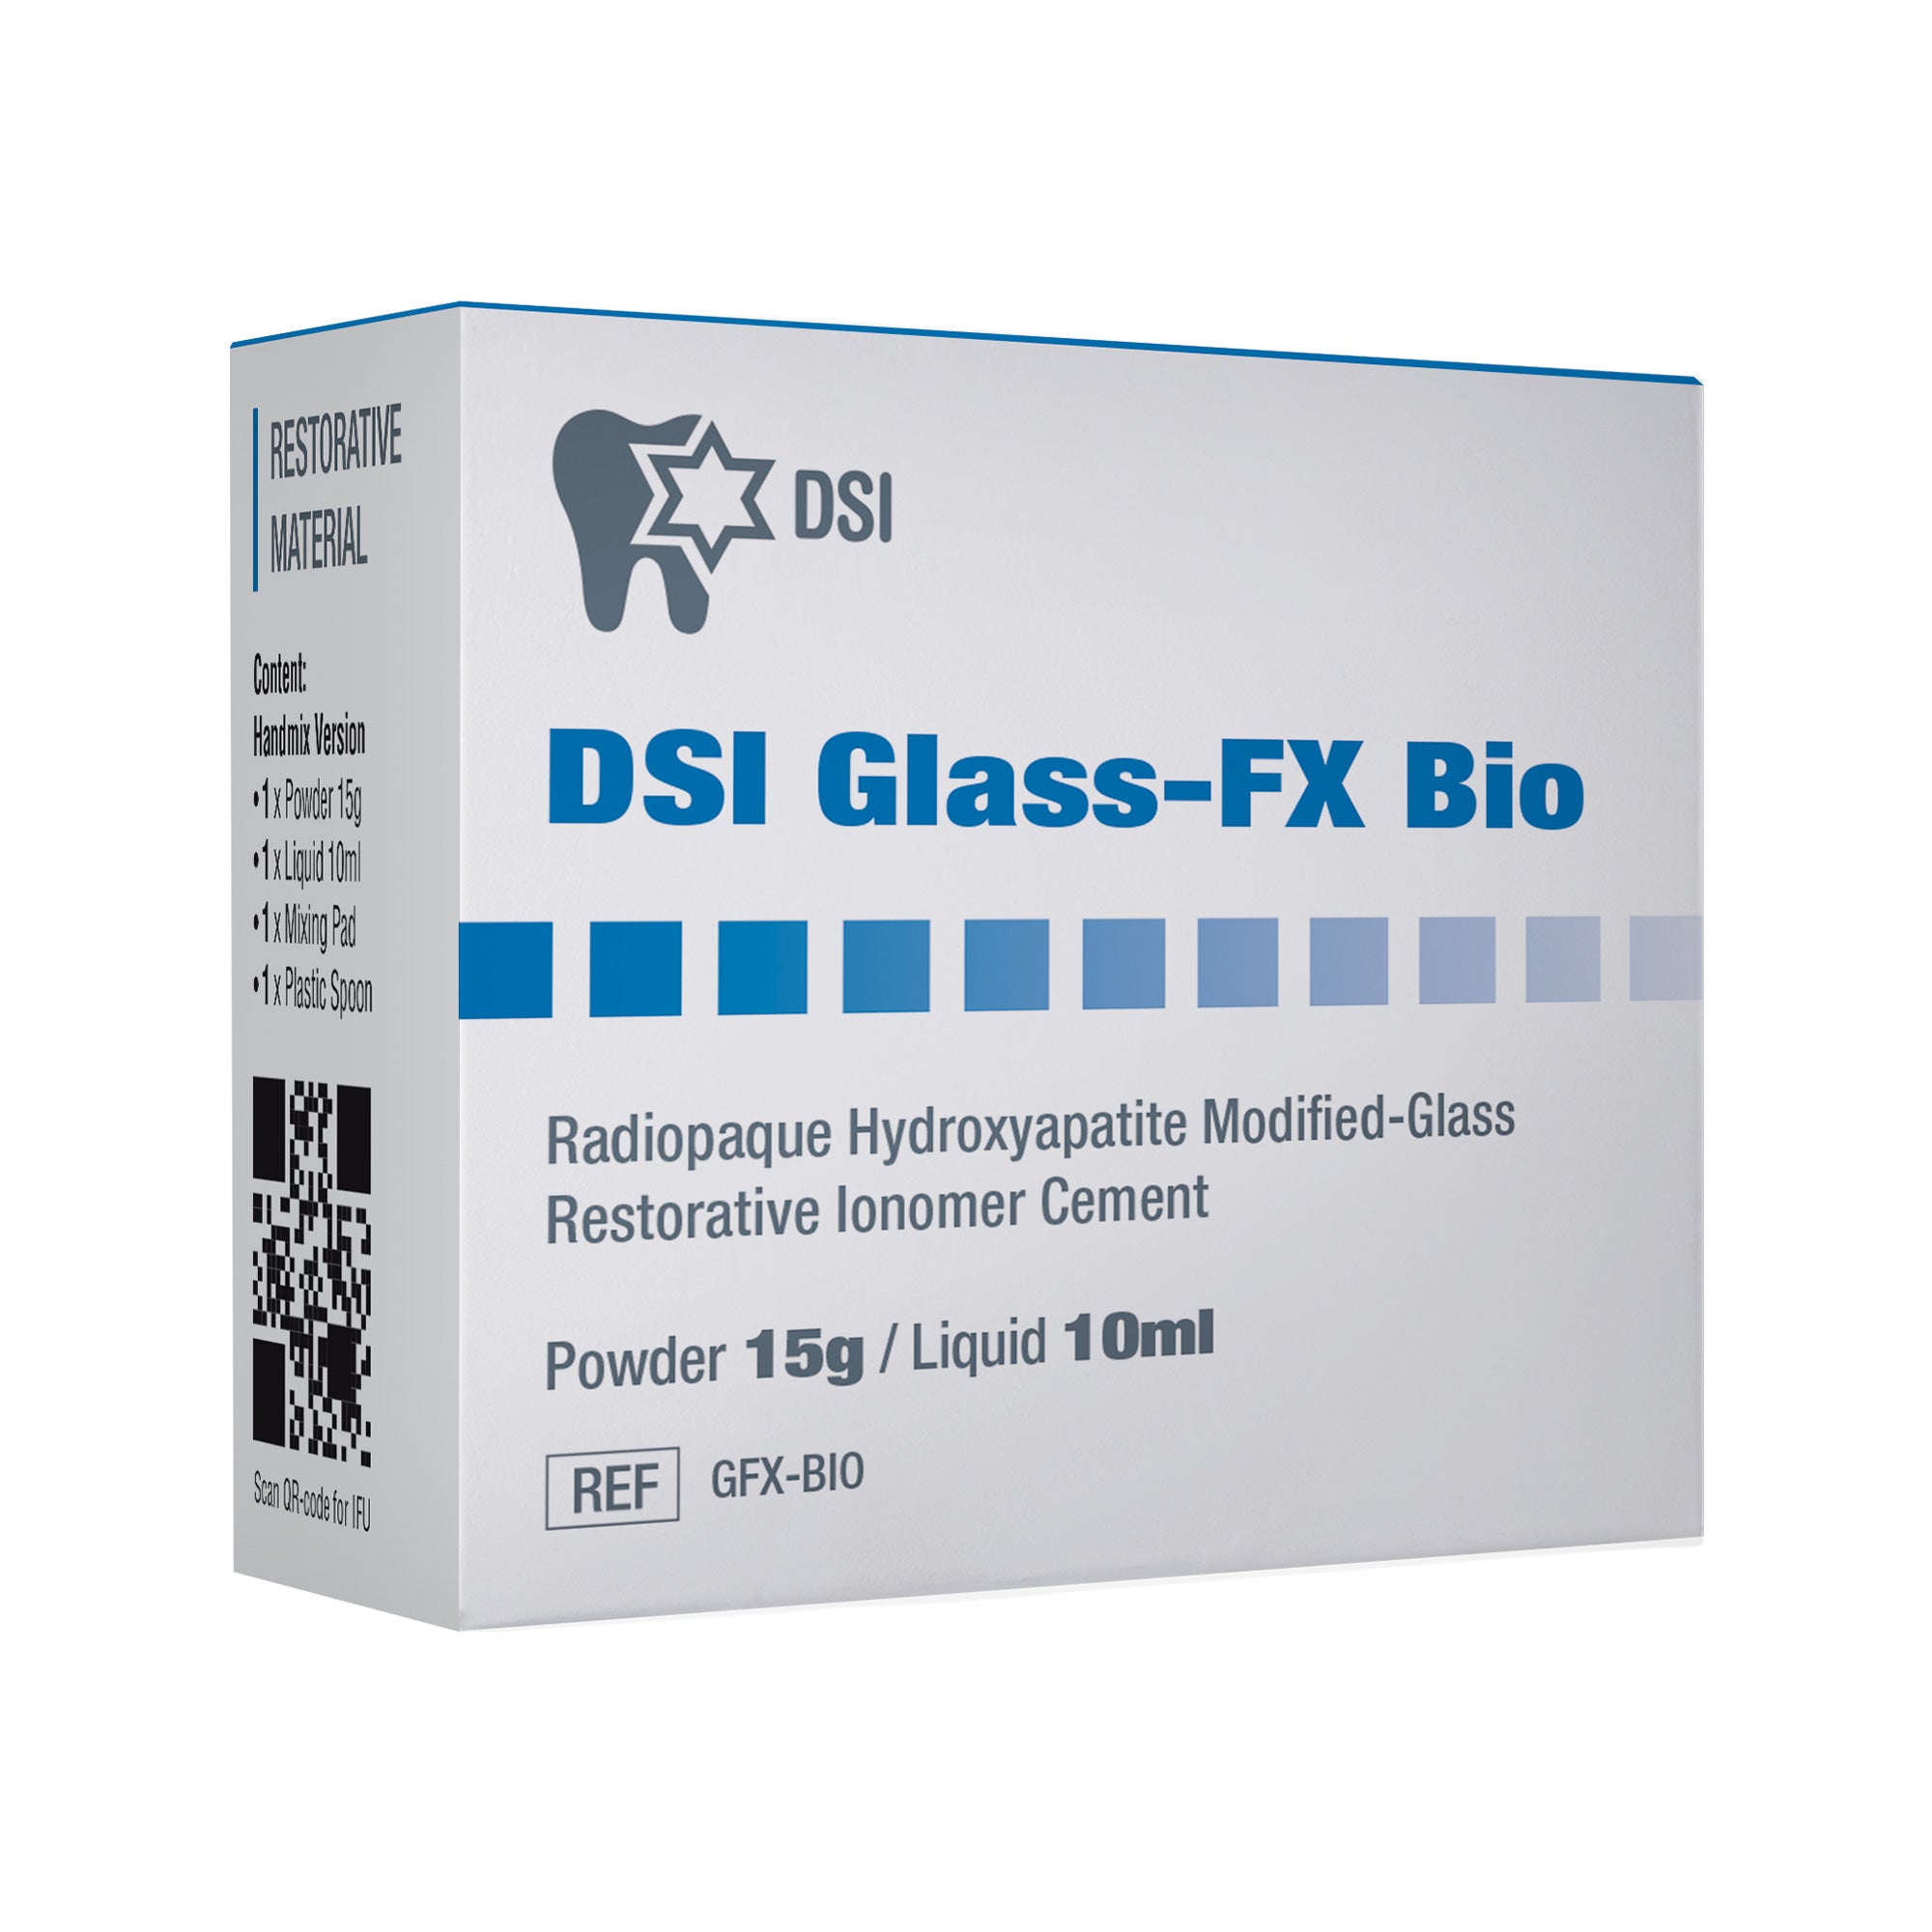 DSI Glass FX Bio - Glass Ionomer Cement With Calcium Hydroxyapatite